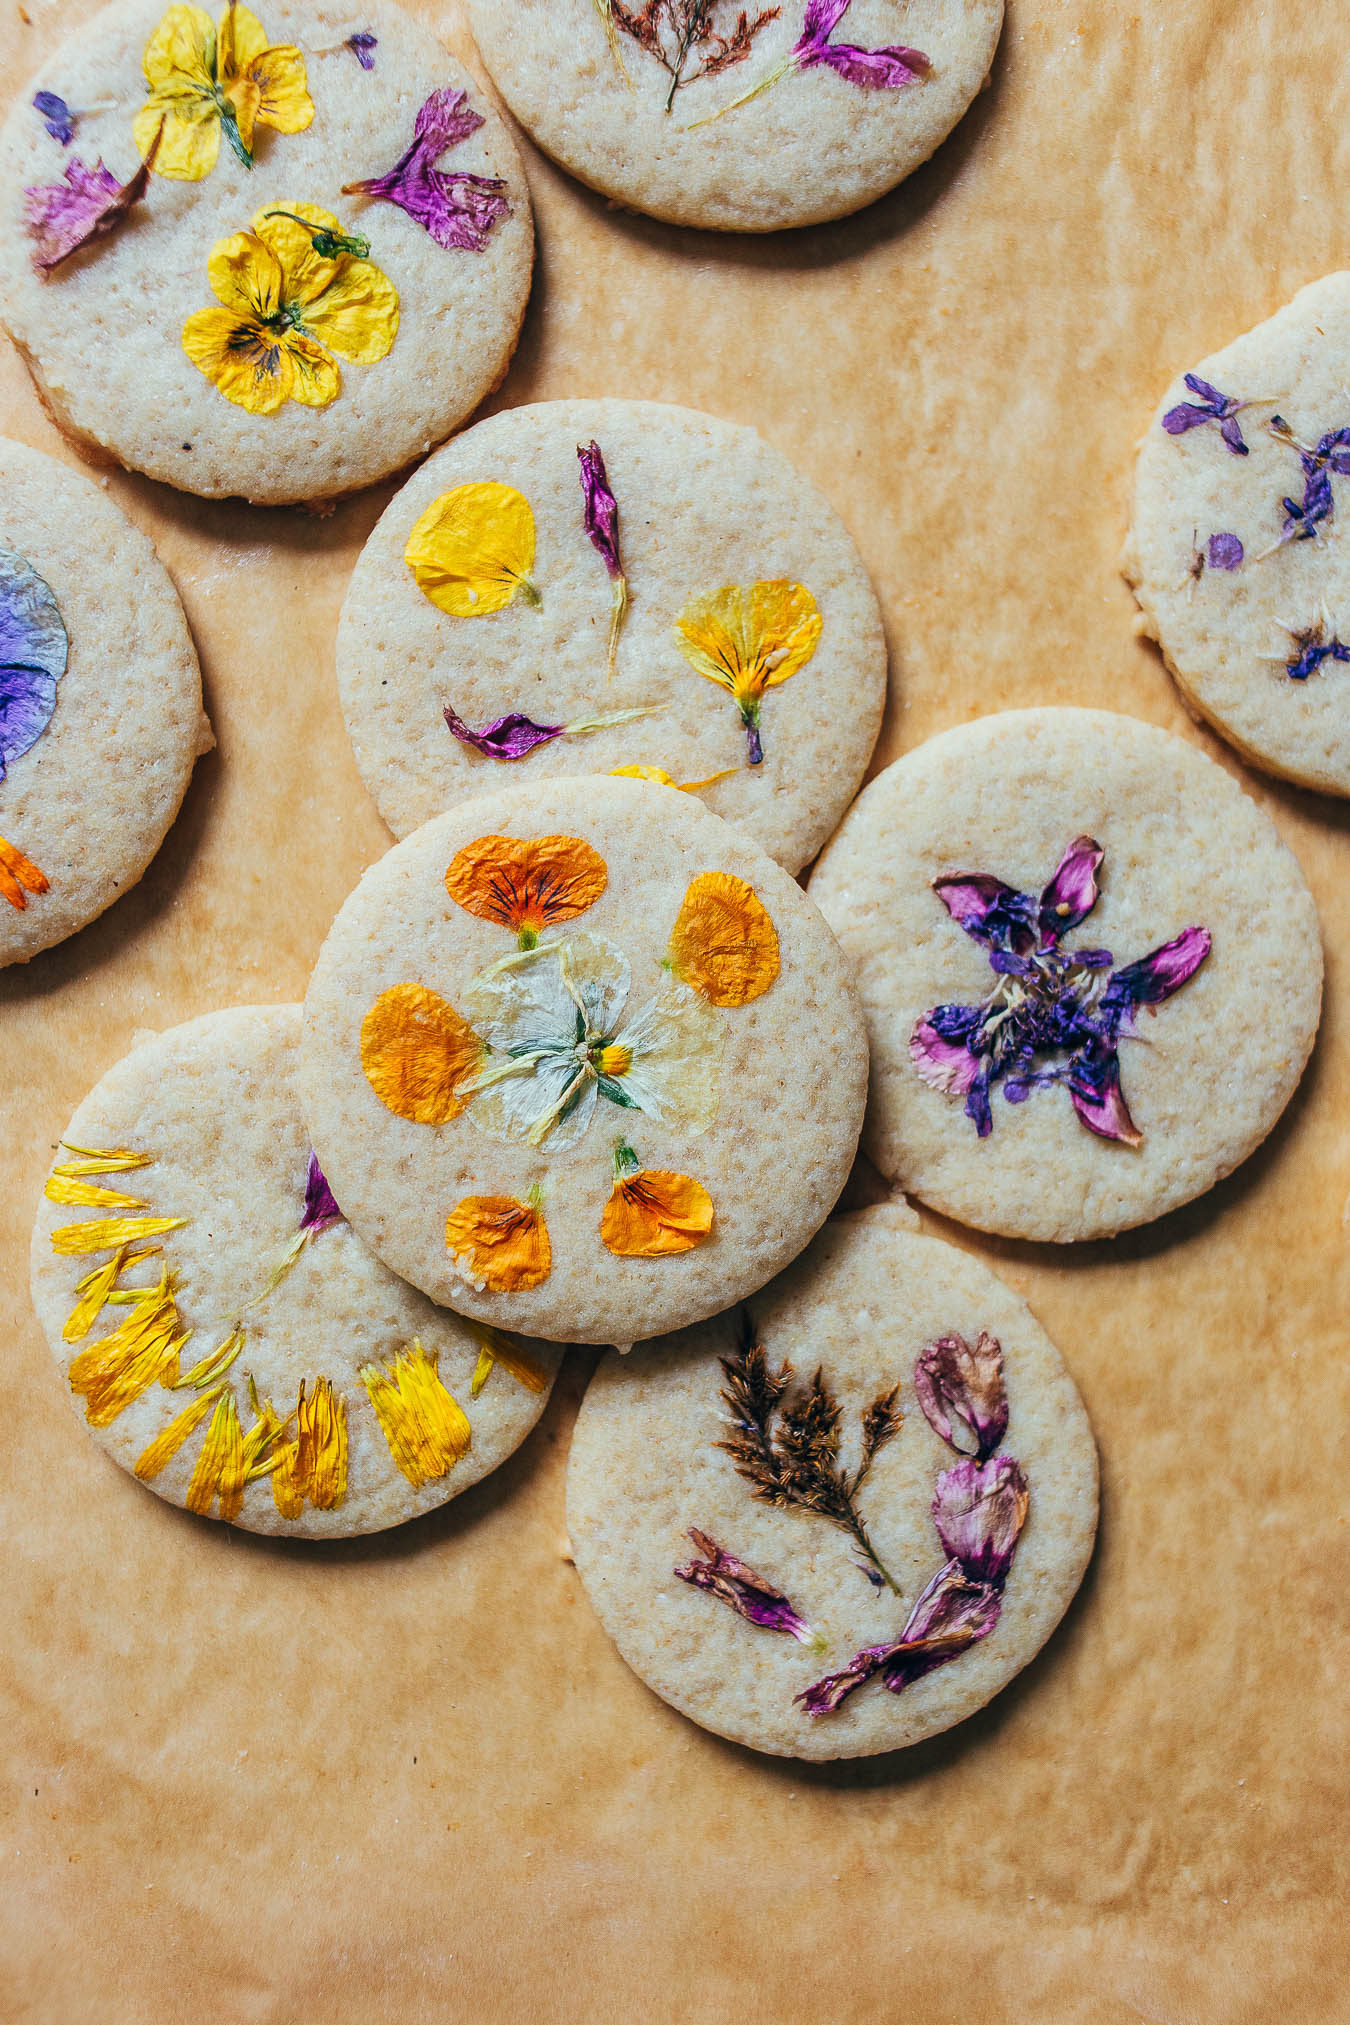 Cookies with pressed edible flowers